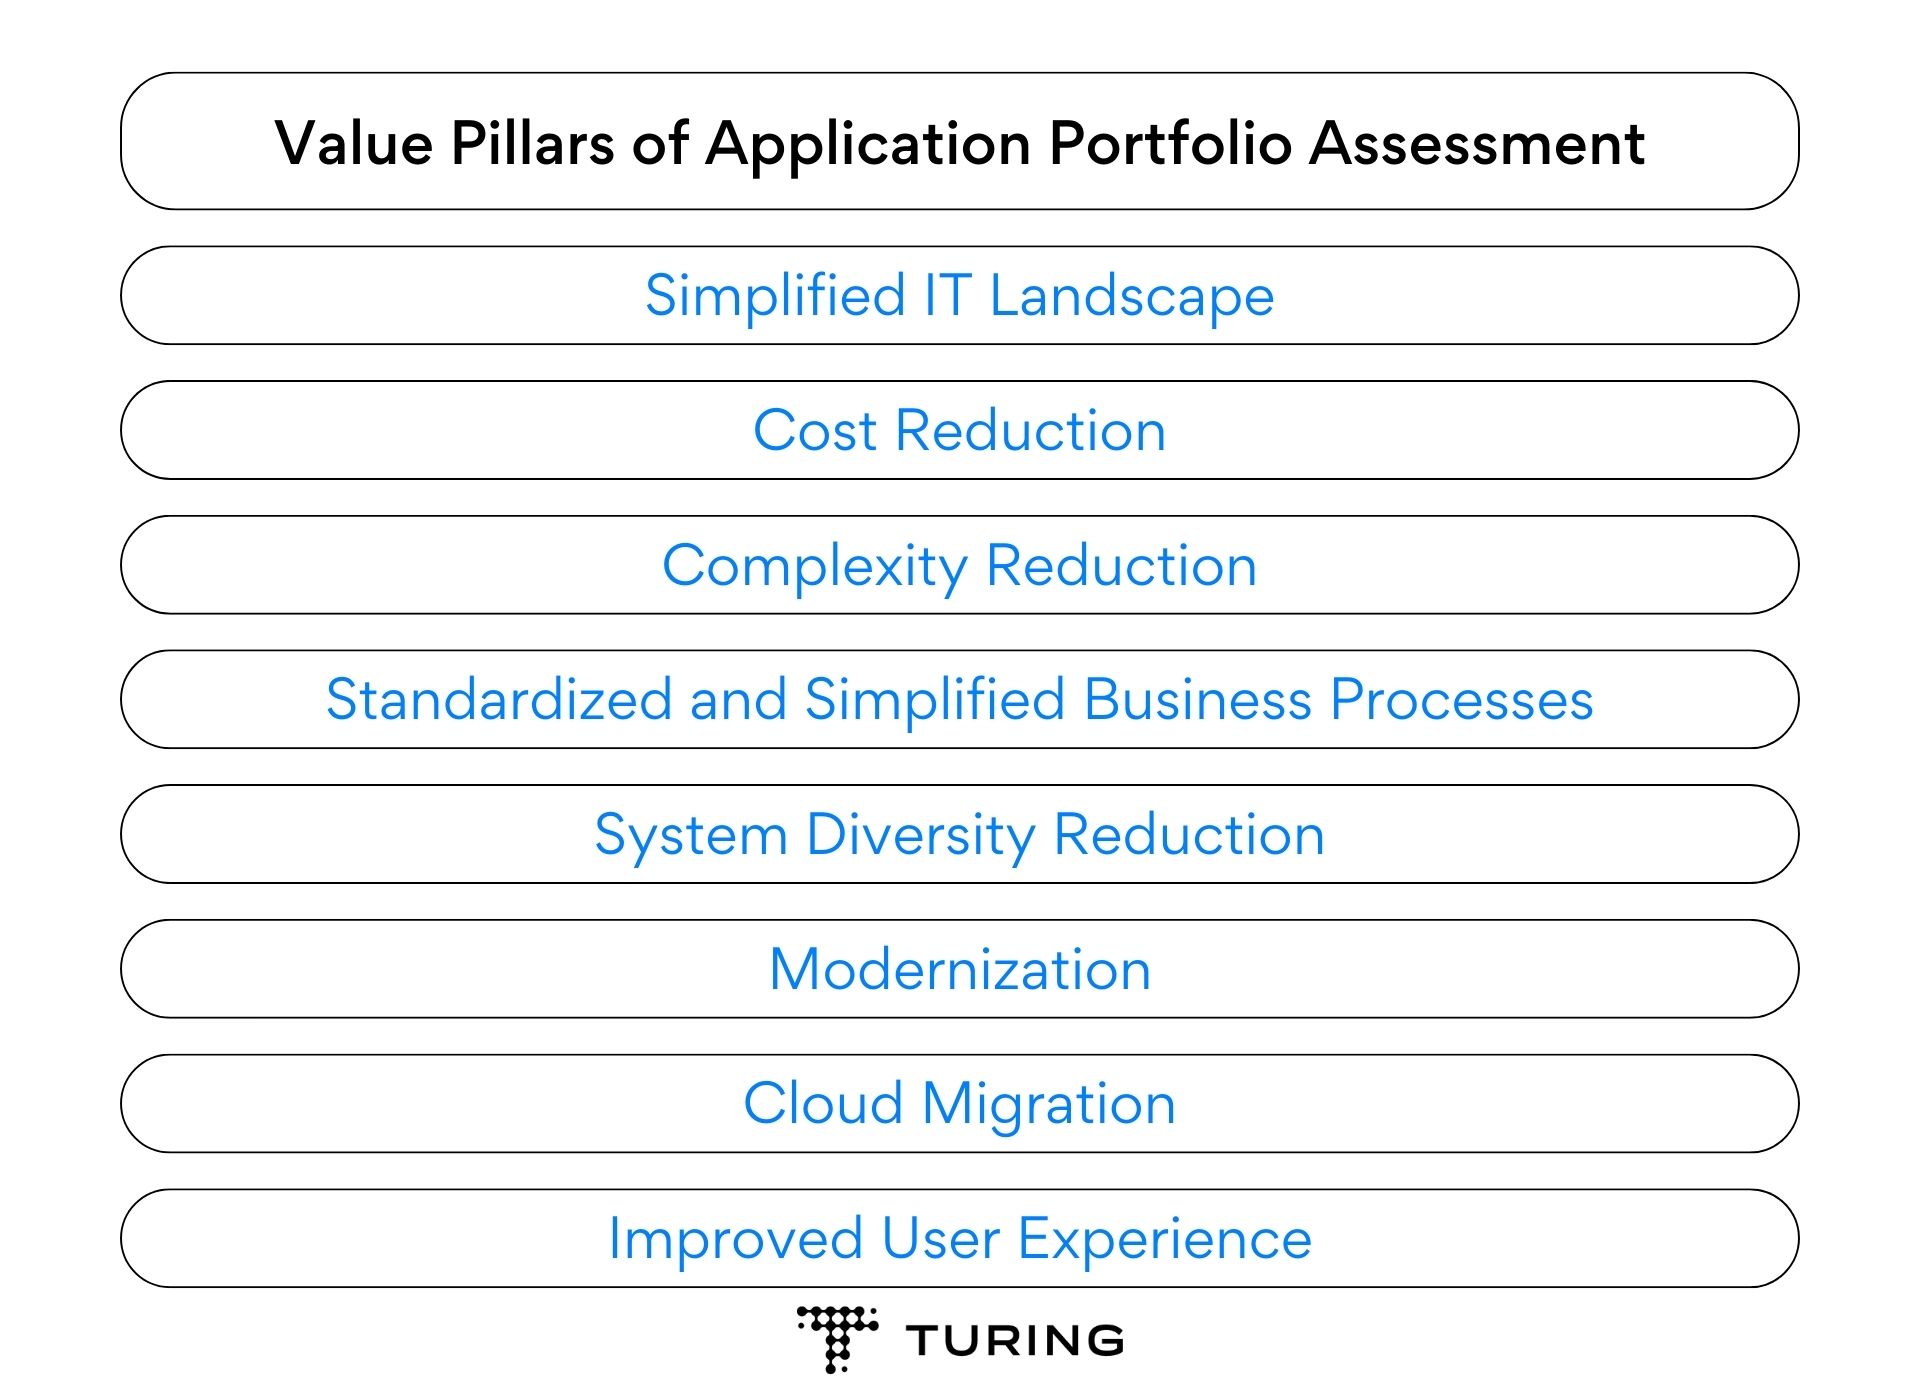 Value Pillars of Application Portfolio Assessment